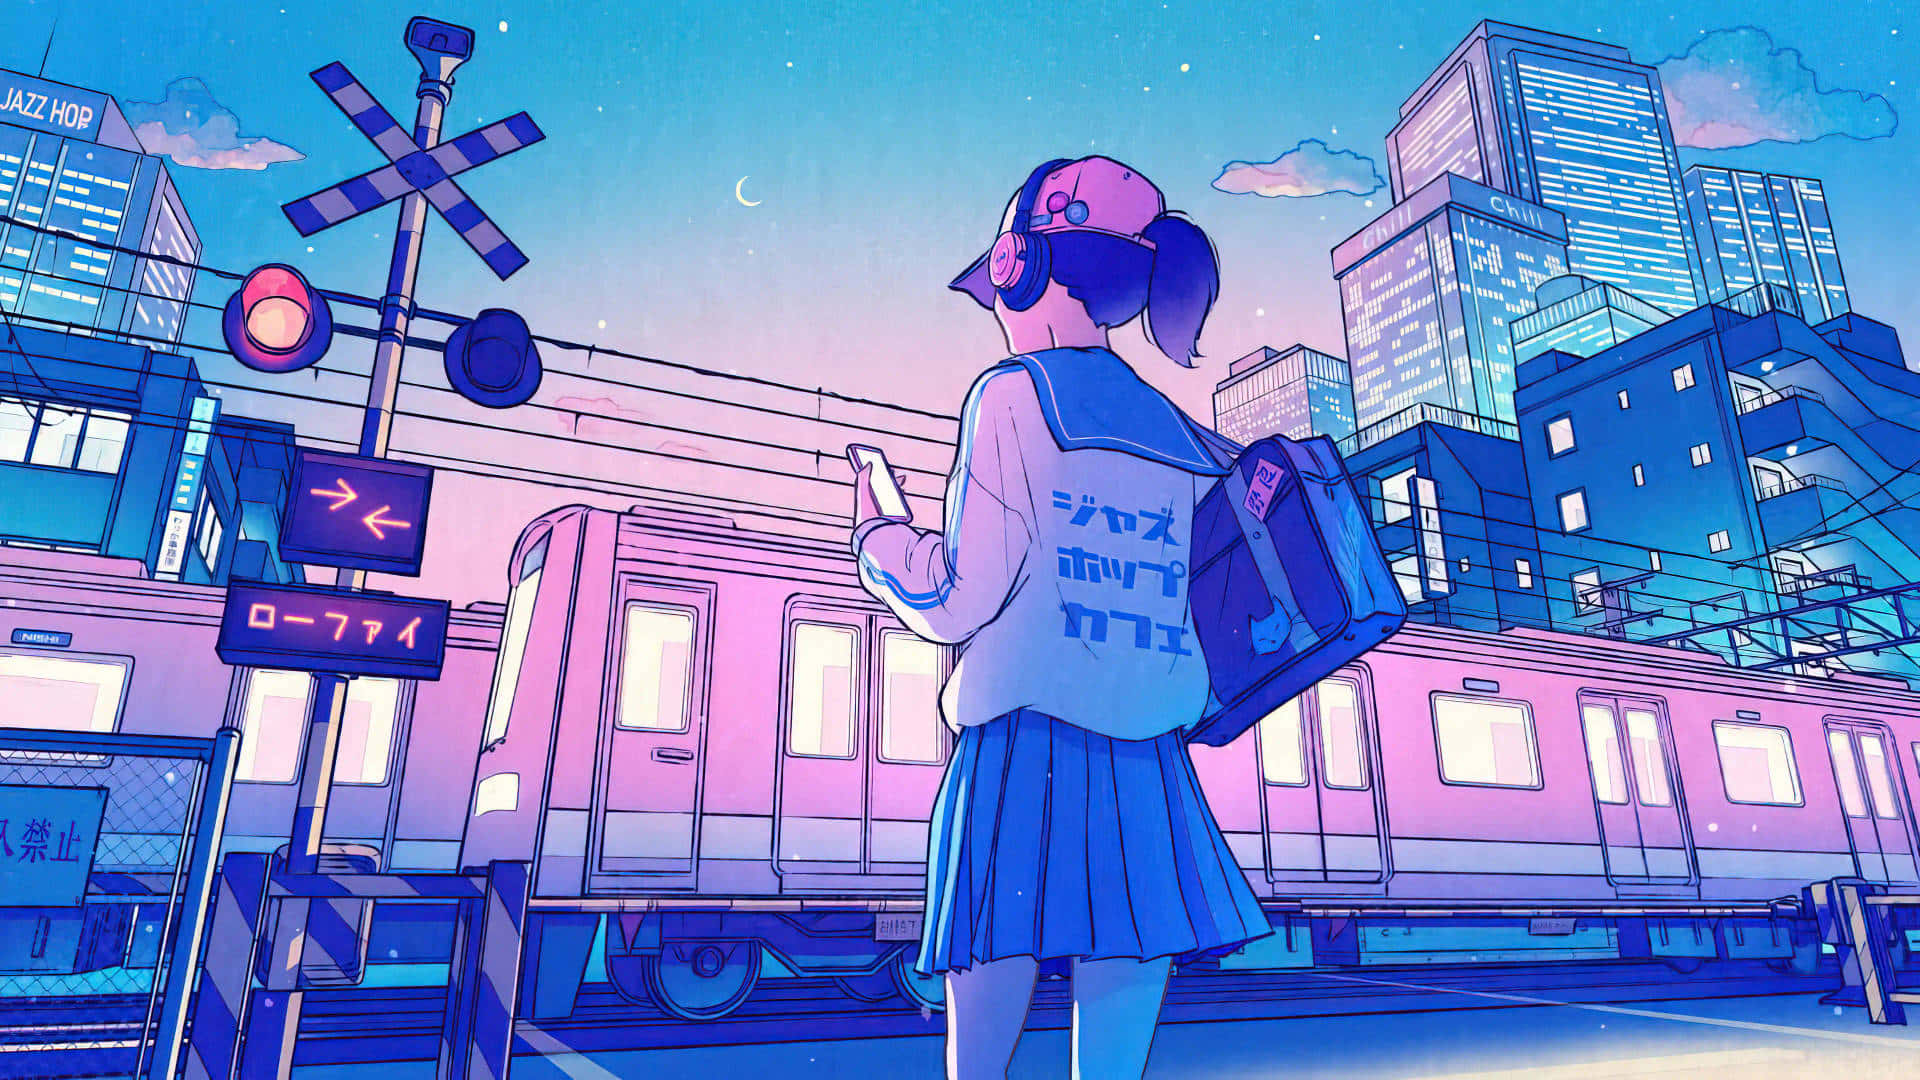 Aesthetic Anime Cityscape - A Vibrant Urban Adventure